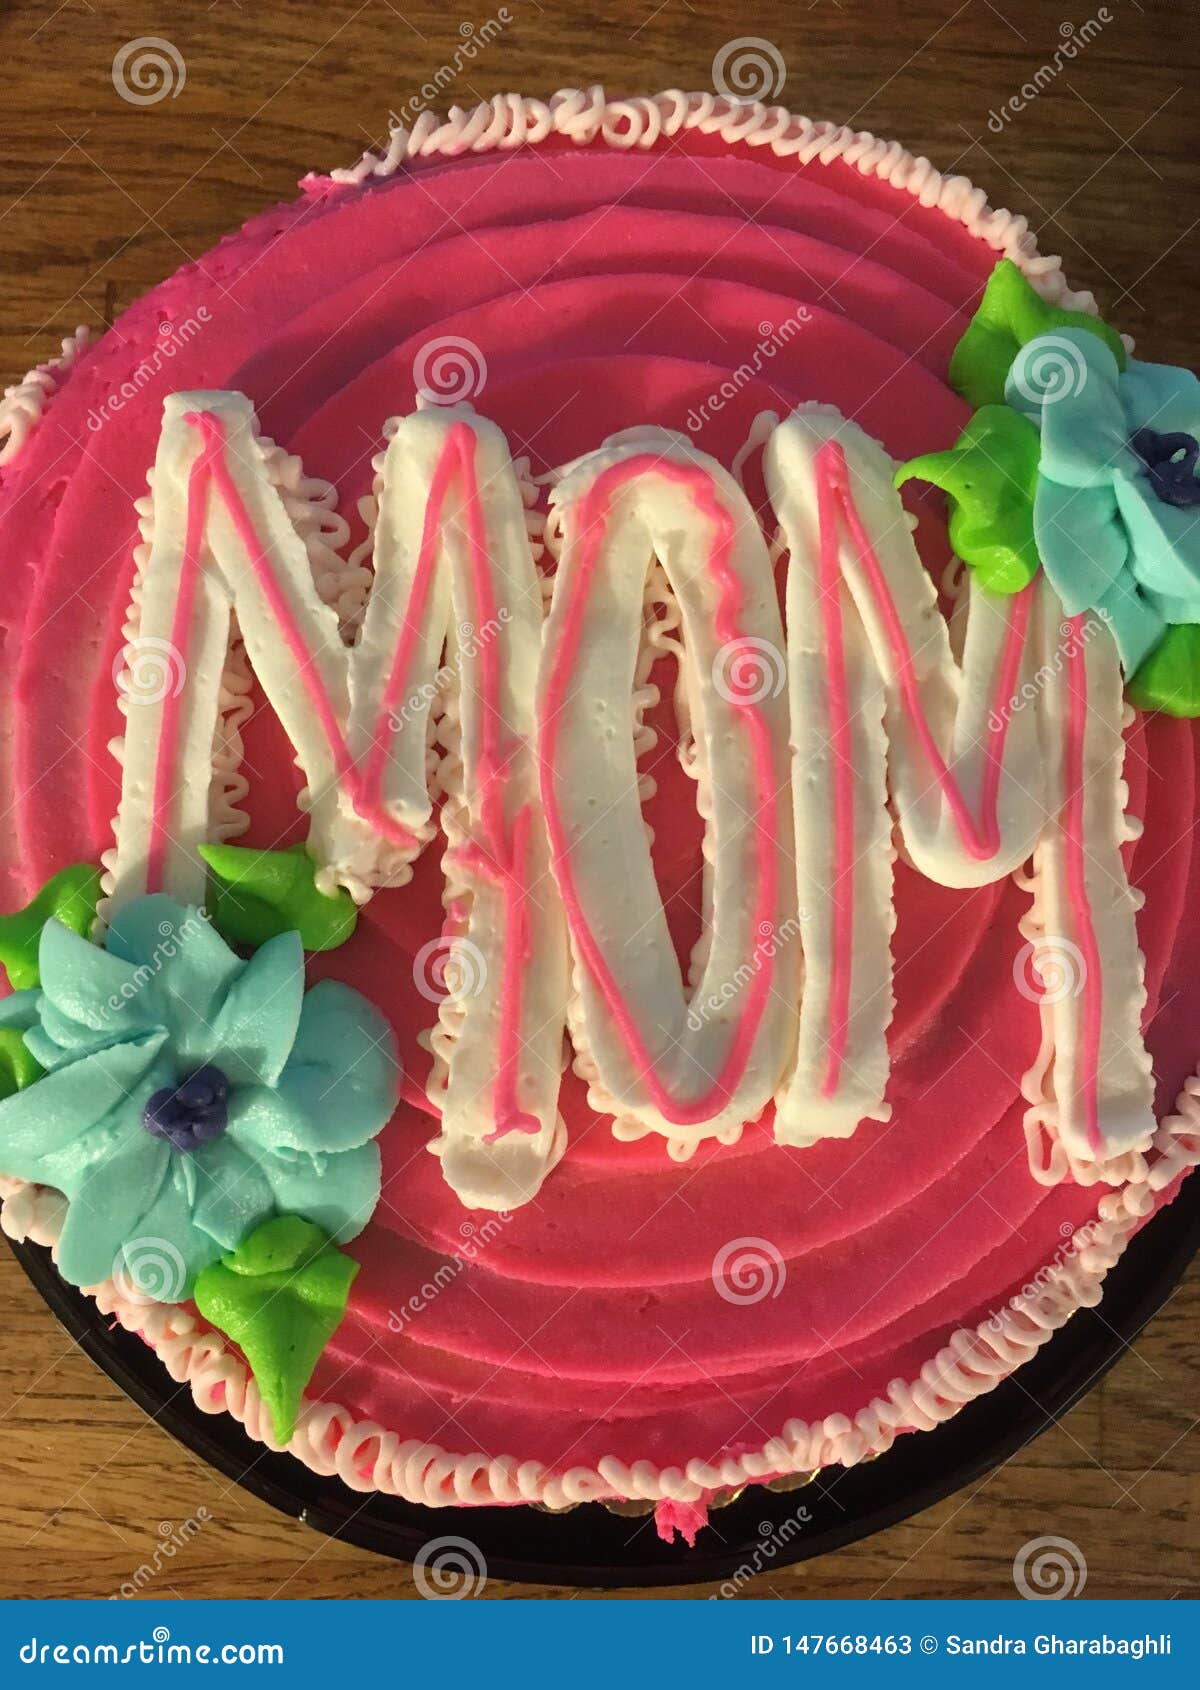 Mother's Day Special Red Velvet Cake